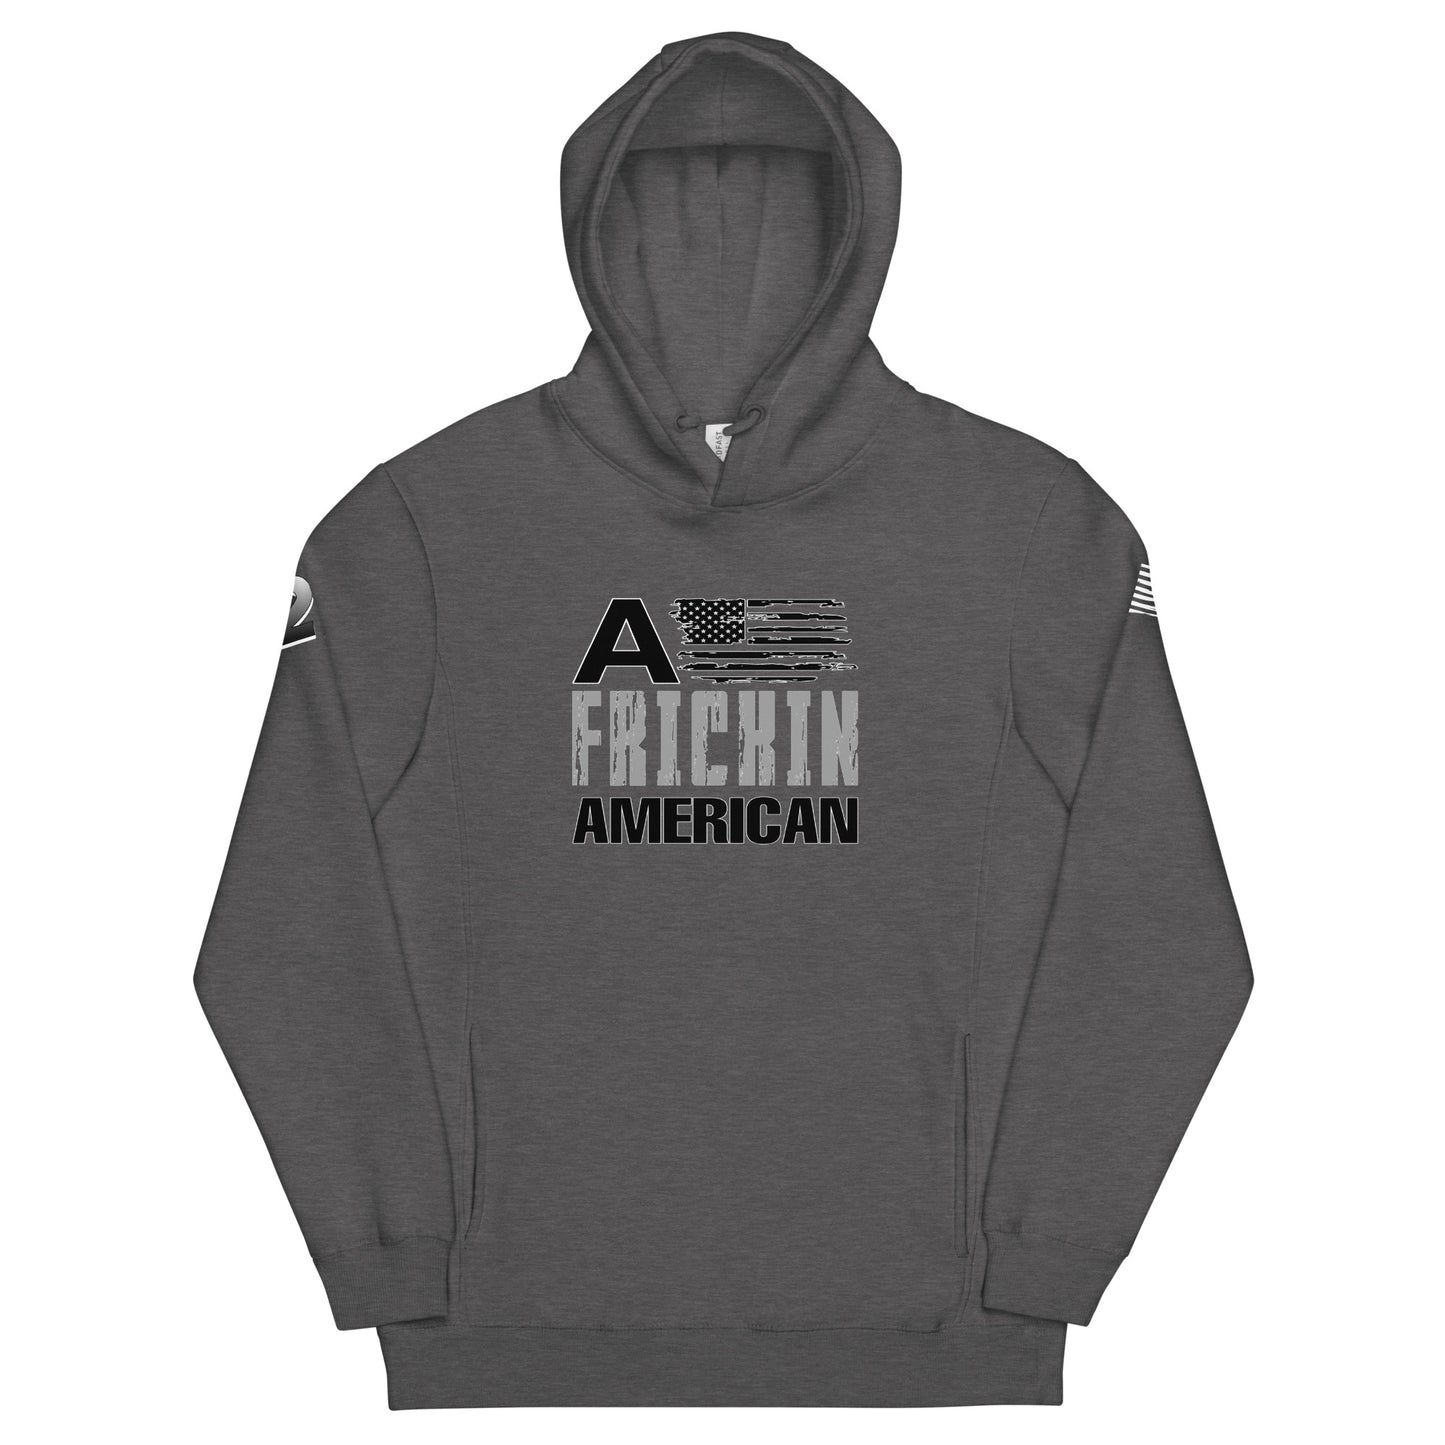 A Frickin American - Unisex fashion hoodie